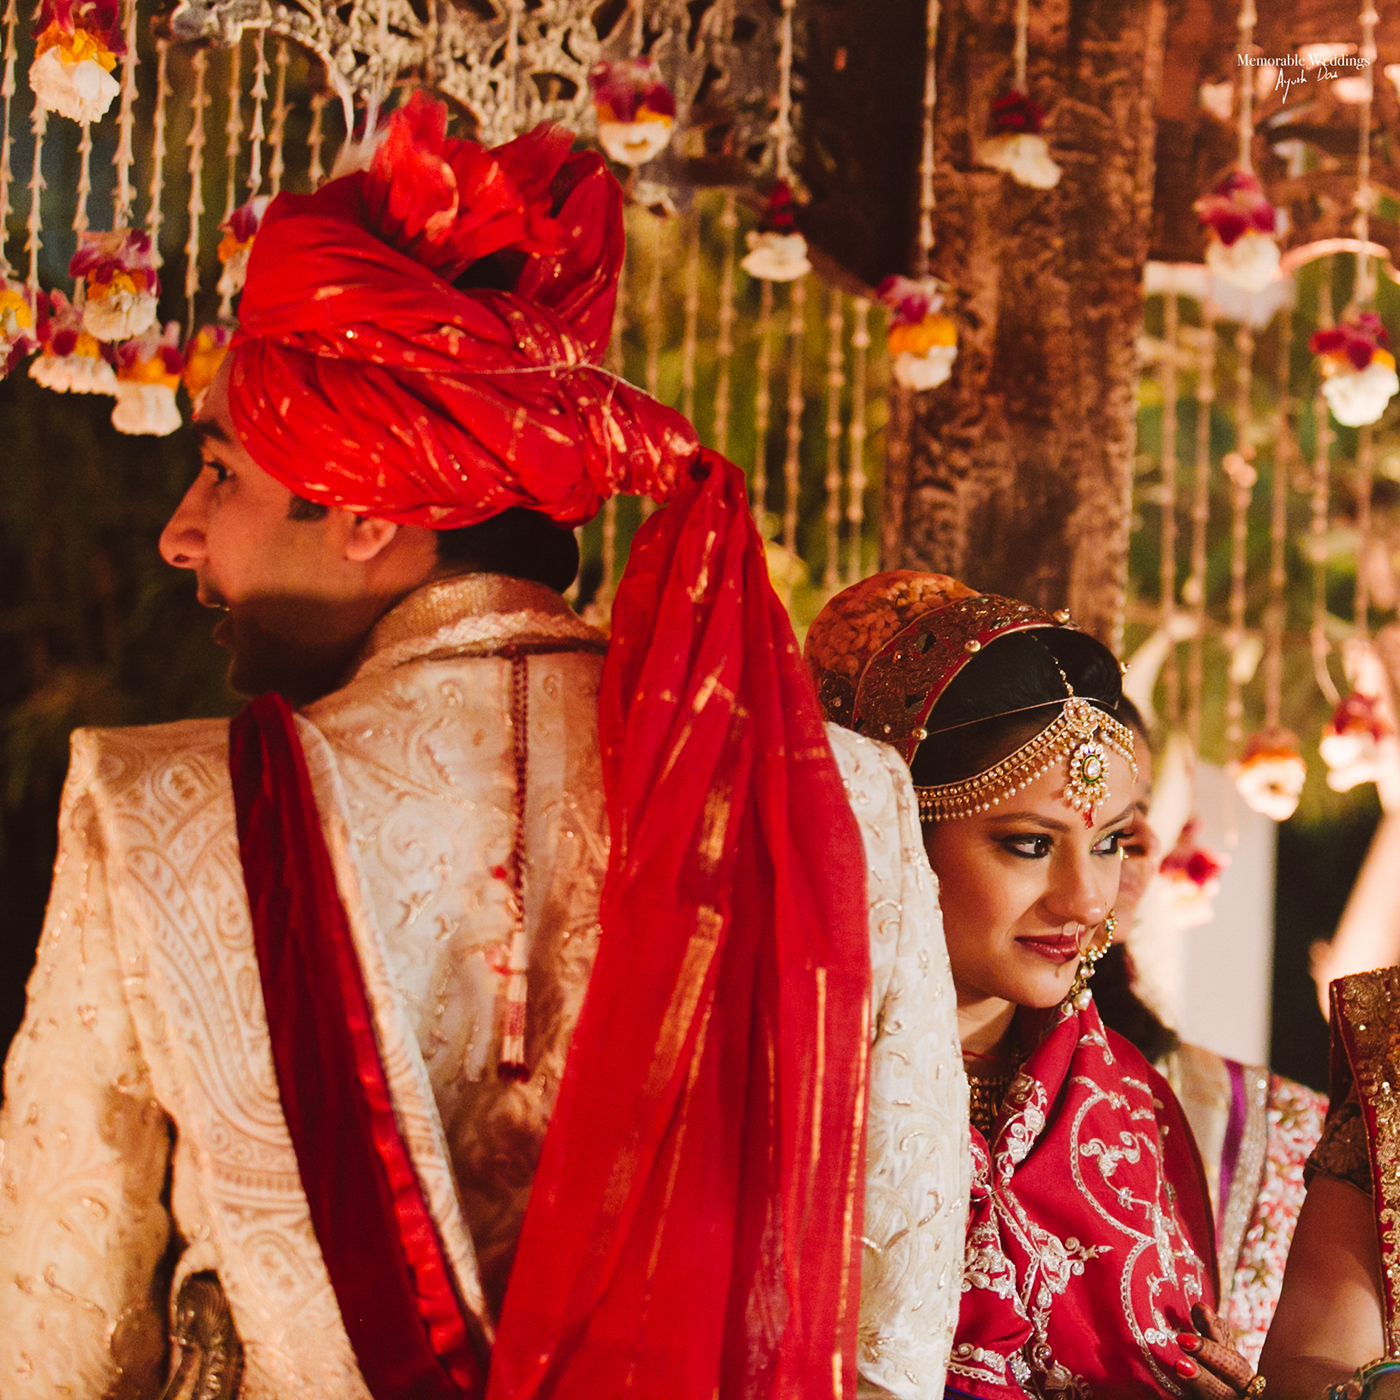 marwari wedding Delhi royalty Incredible India indian wedding Delhi Weddings indian royalty Marwari Weddings Rajasthan